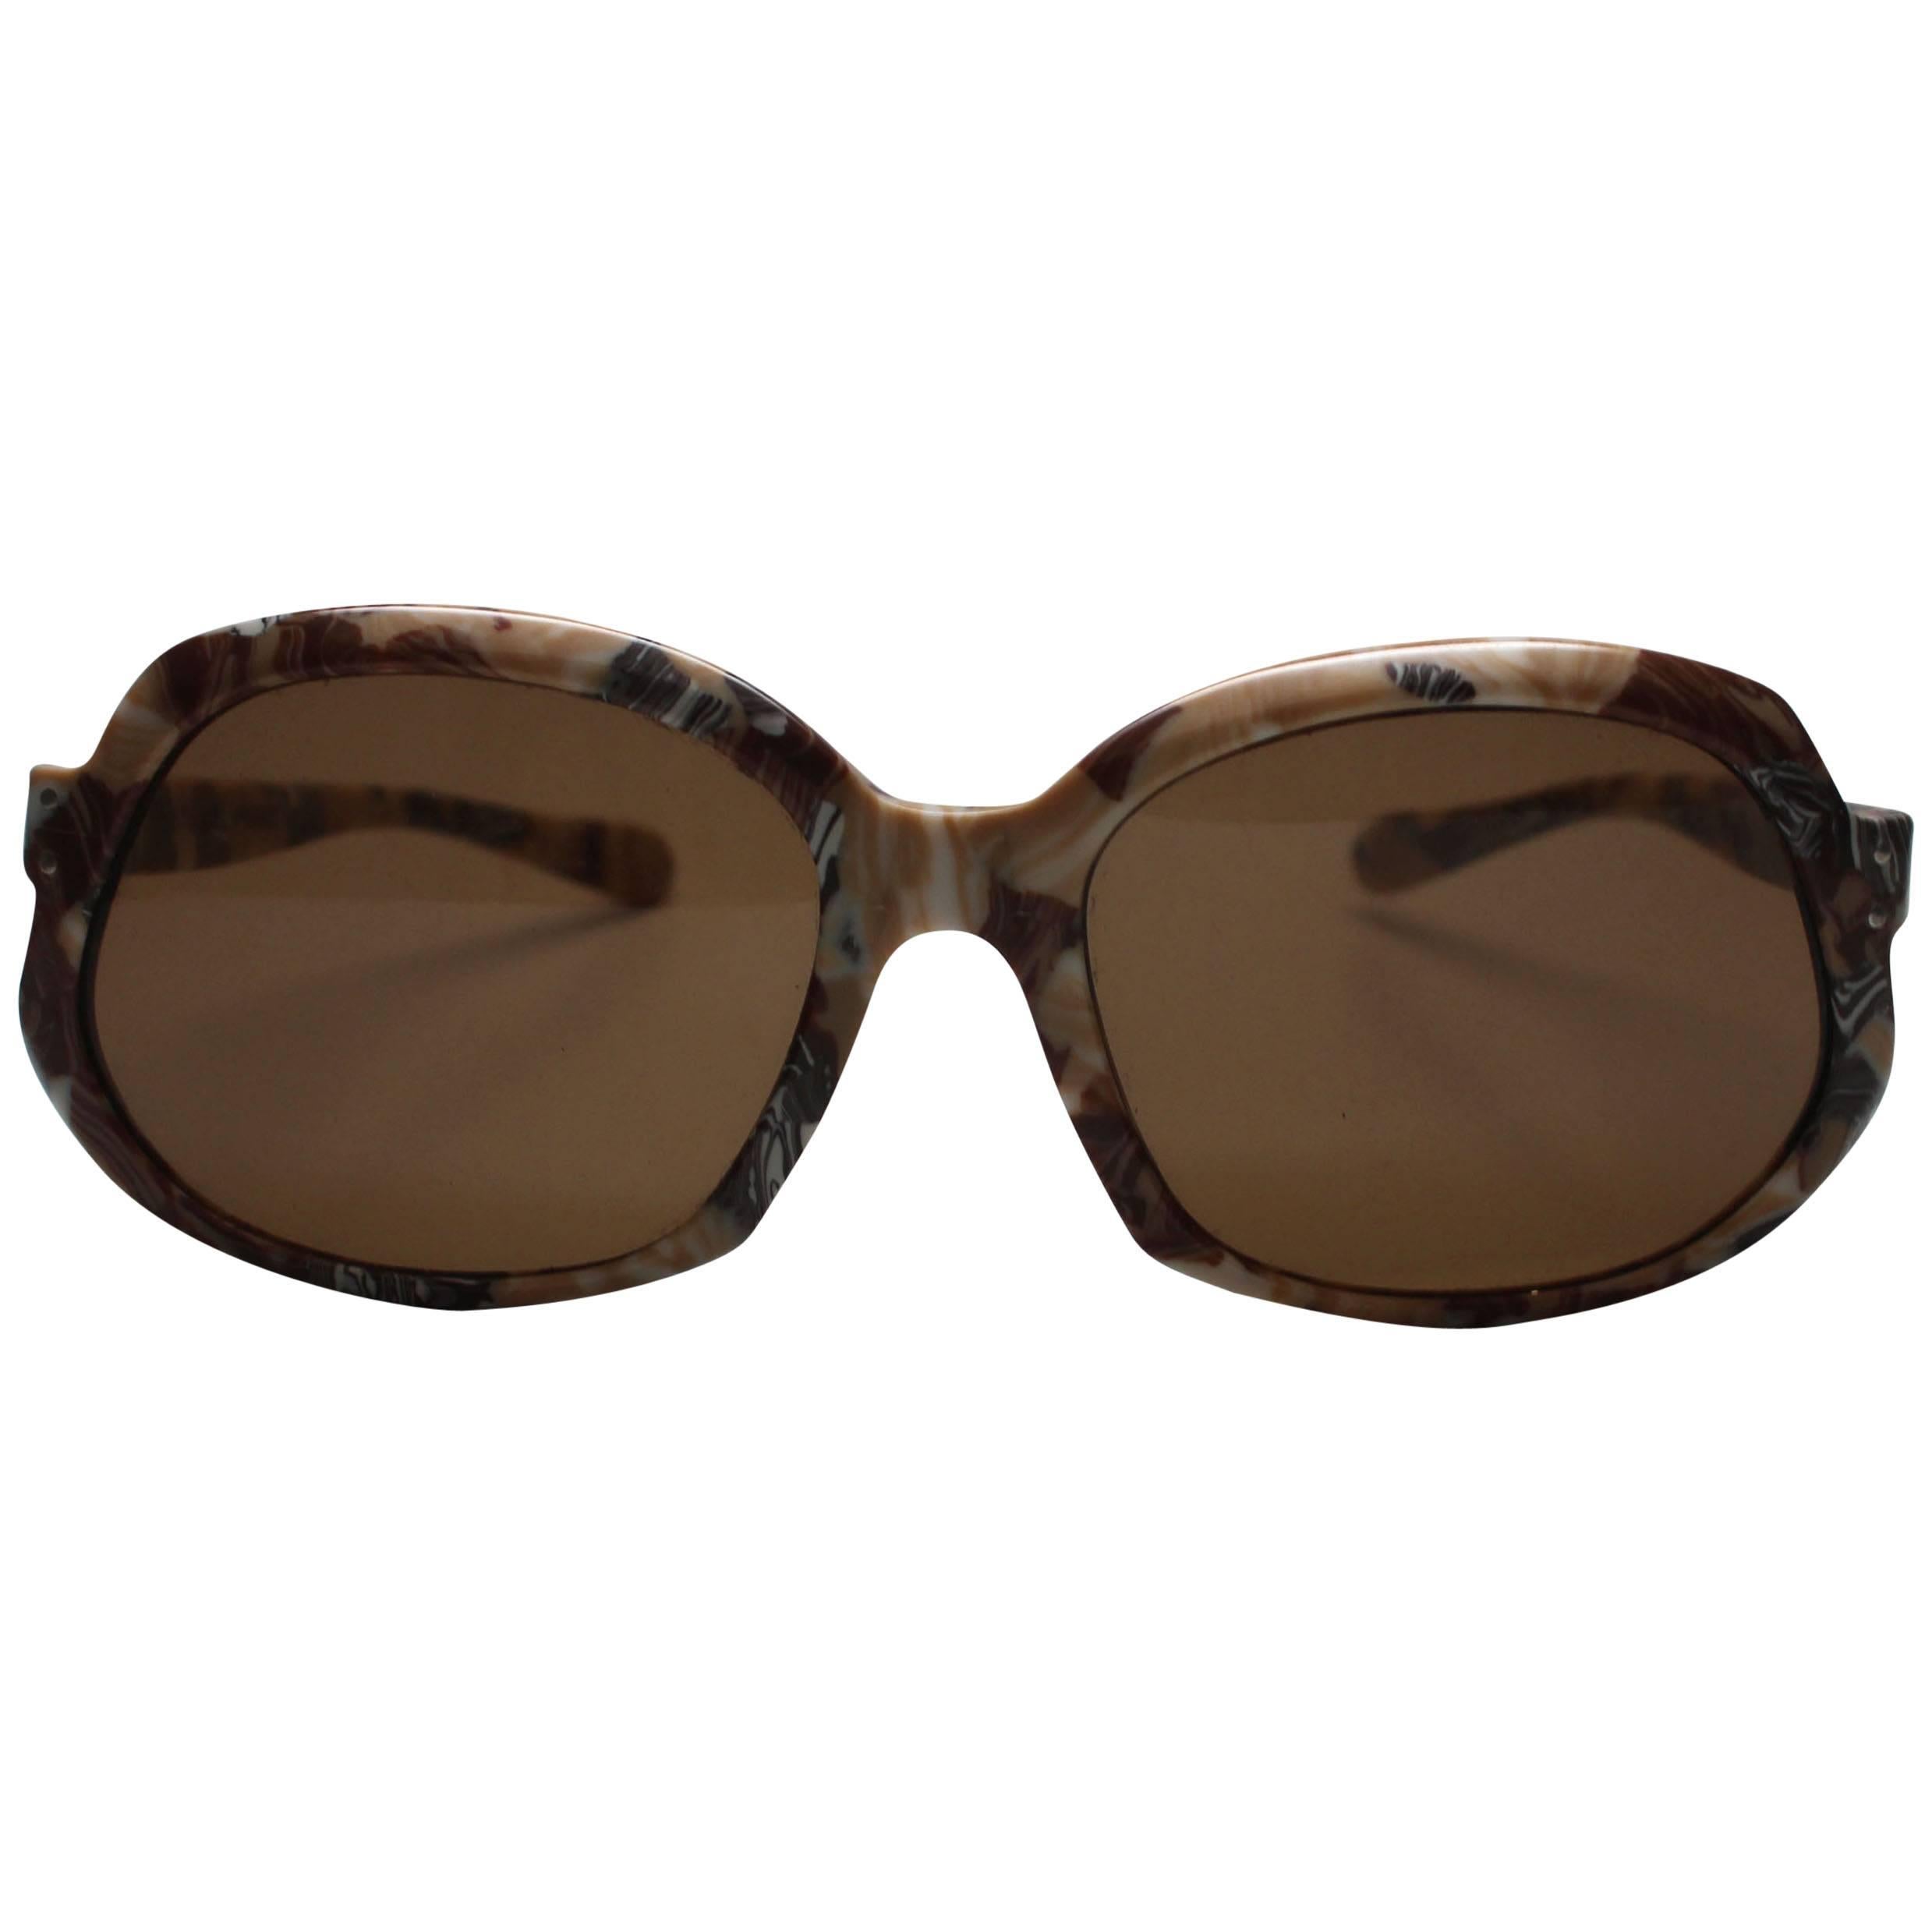 1970s Deadstock St. Larel Sunglasses Made in France For Sale